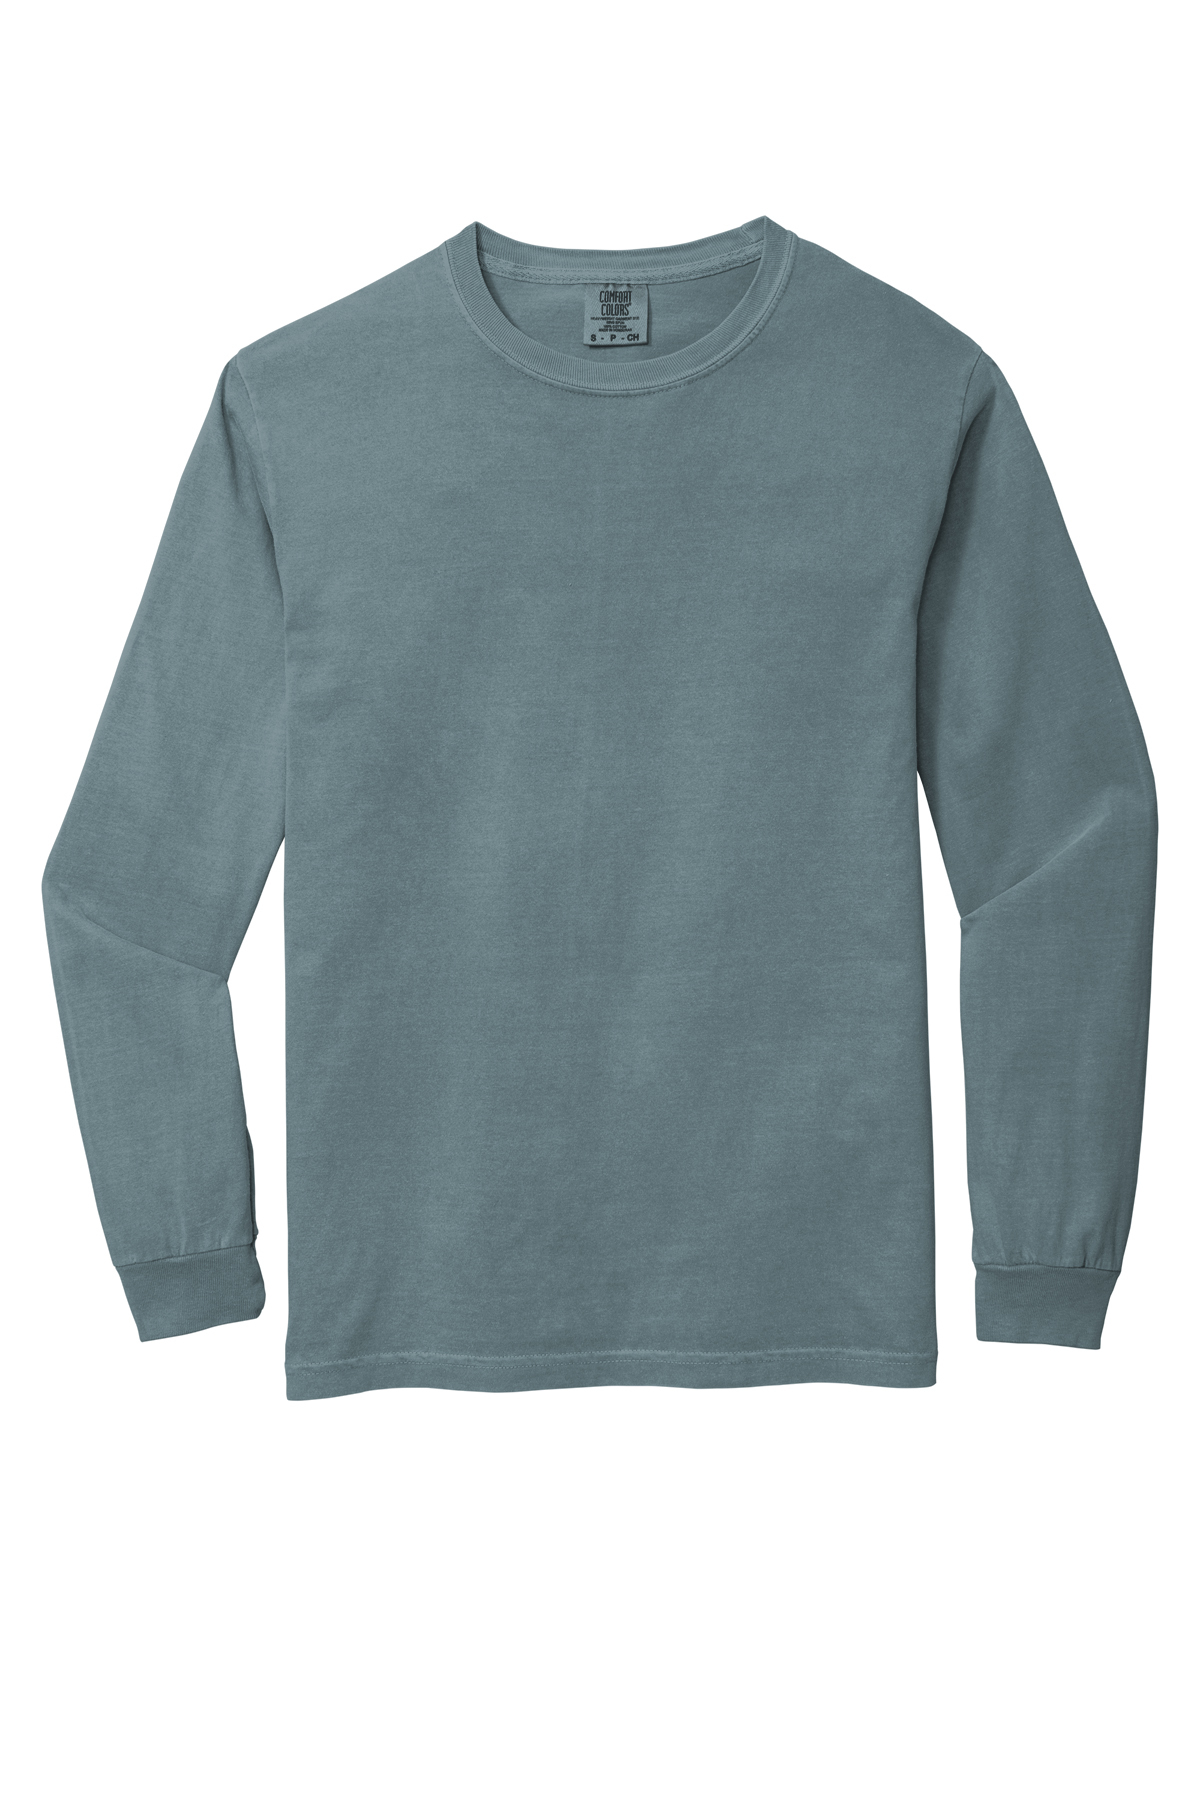 Comfort Colors Spruce Printed Long Sleeve (Adult Unisex) – Bowfish